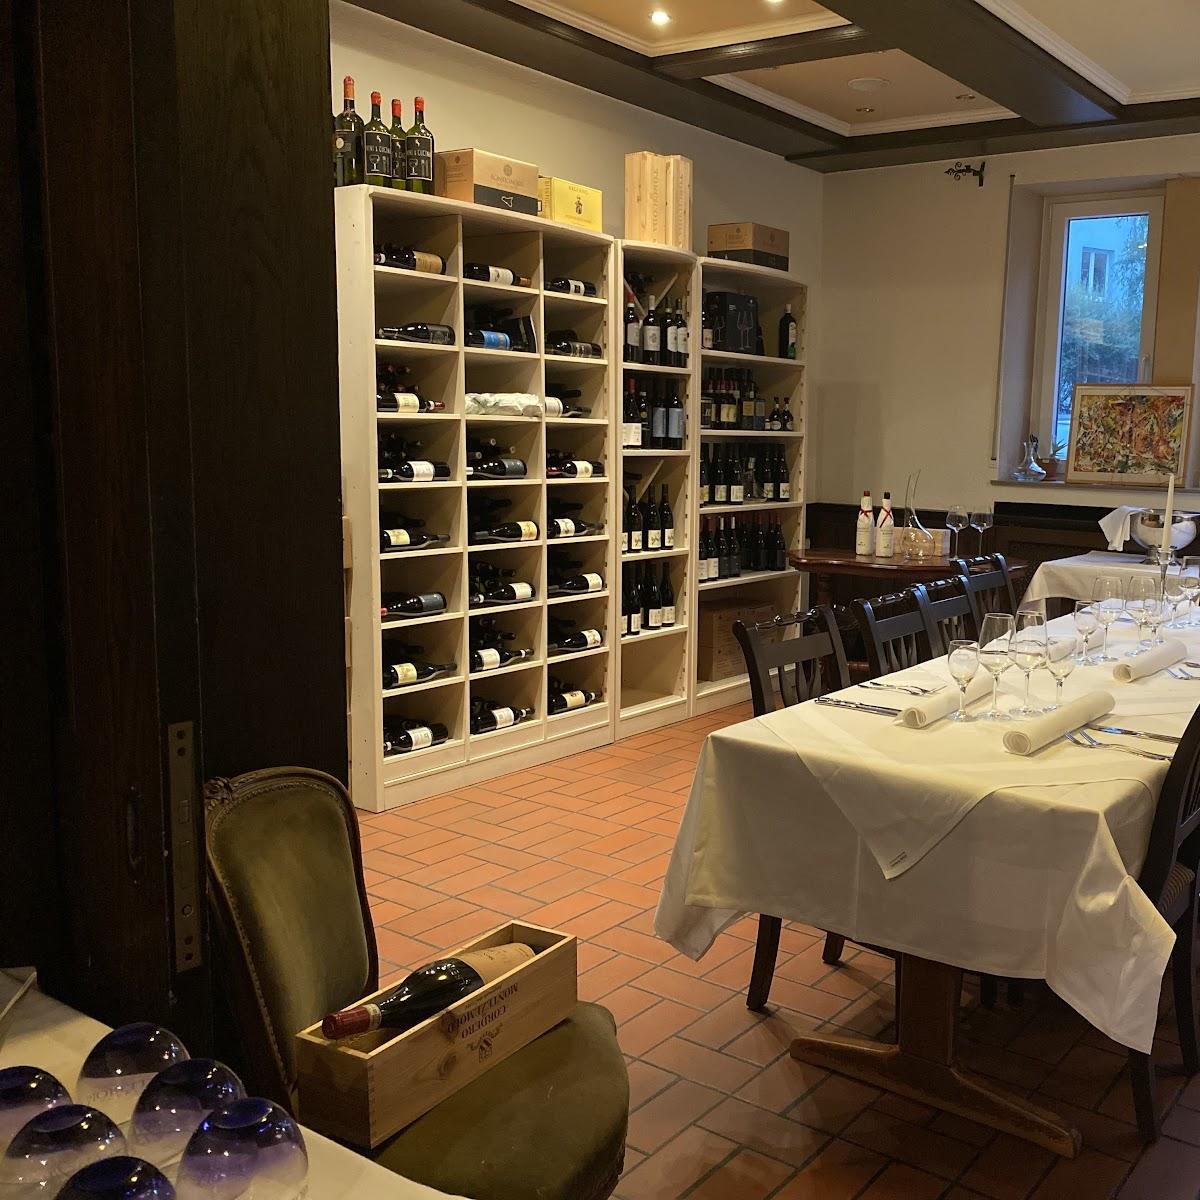 Restaurant "Ristorante Italiano: Vini & Cucina da Danilo - im König Wilhelm" in Ulm